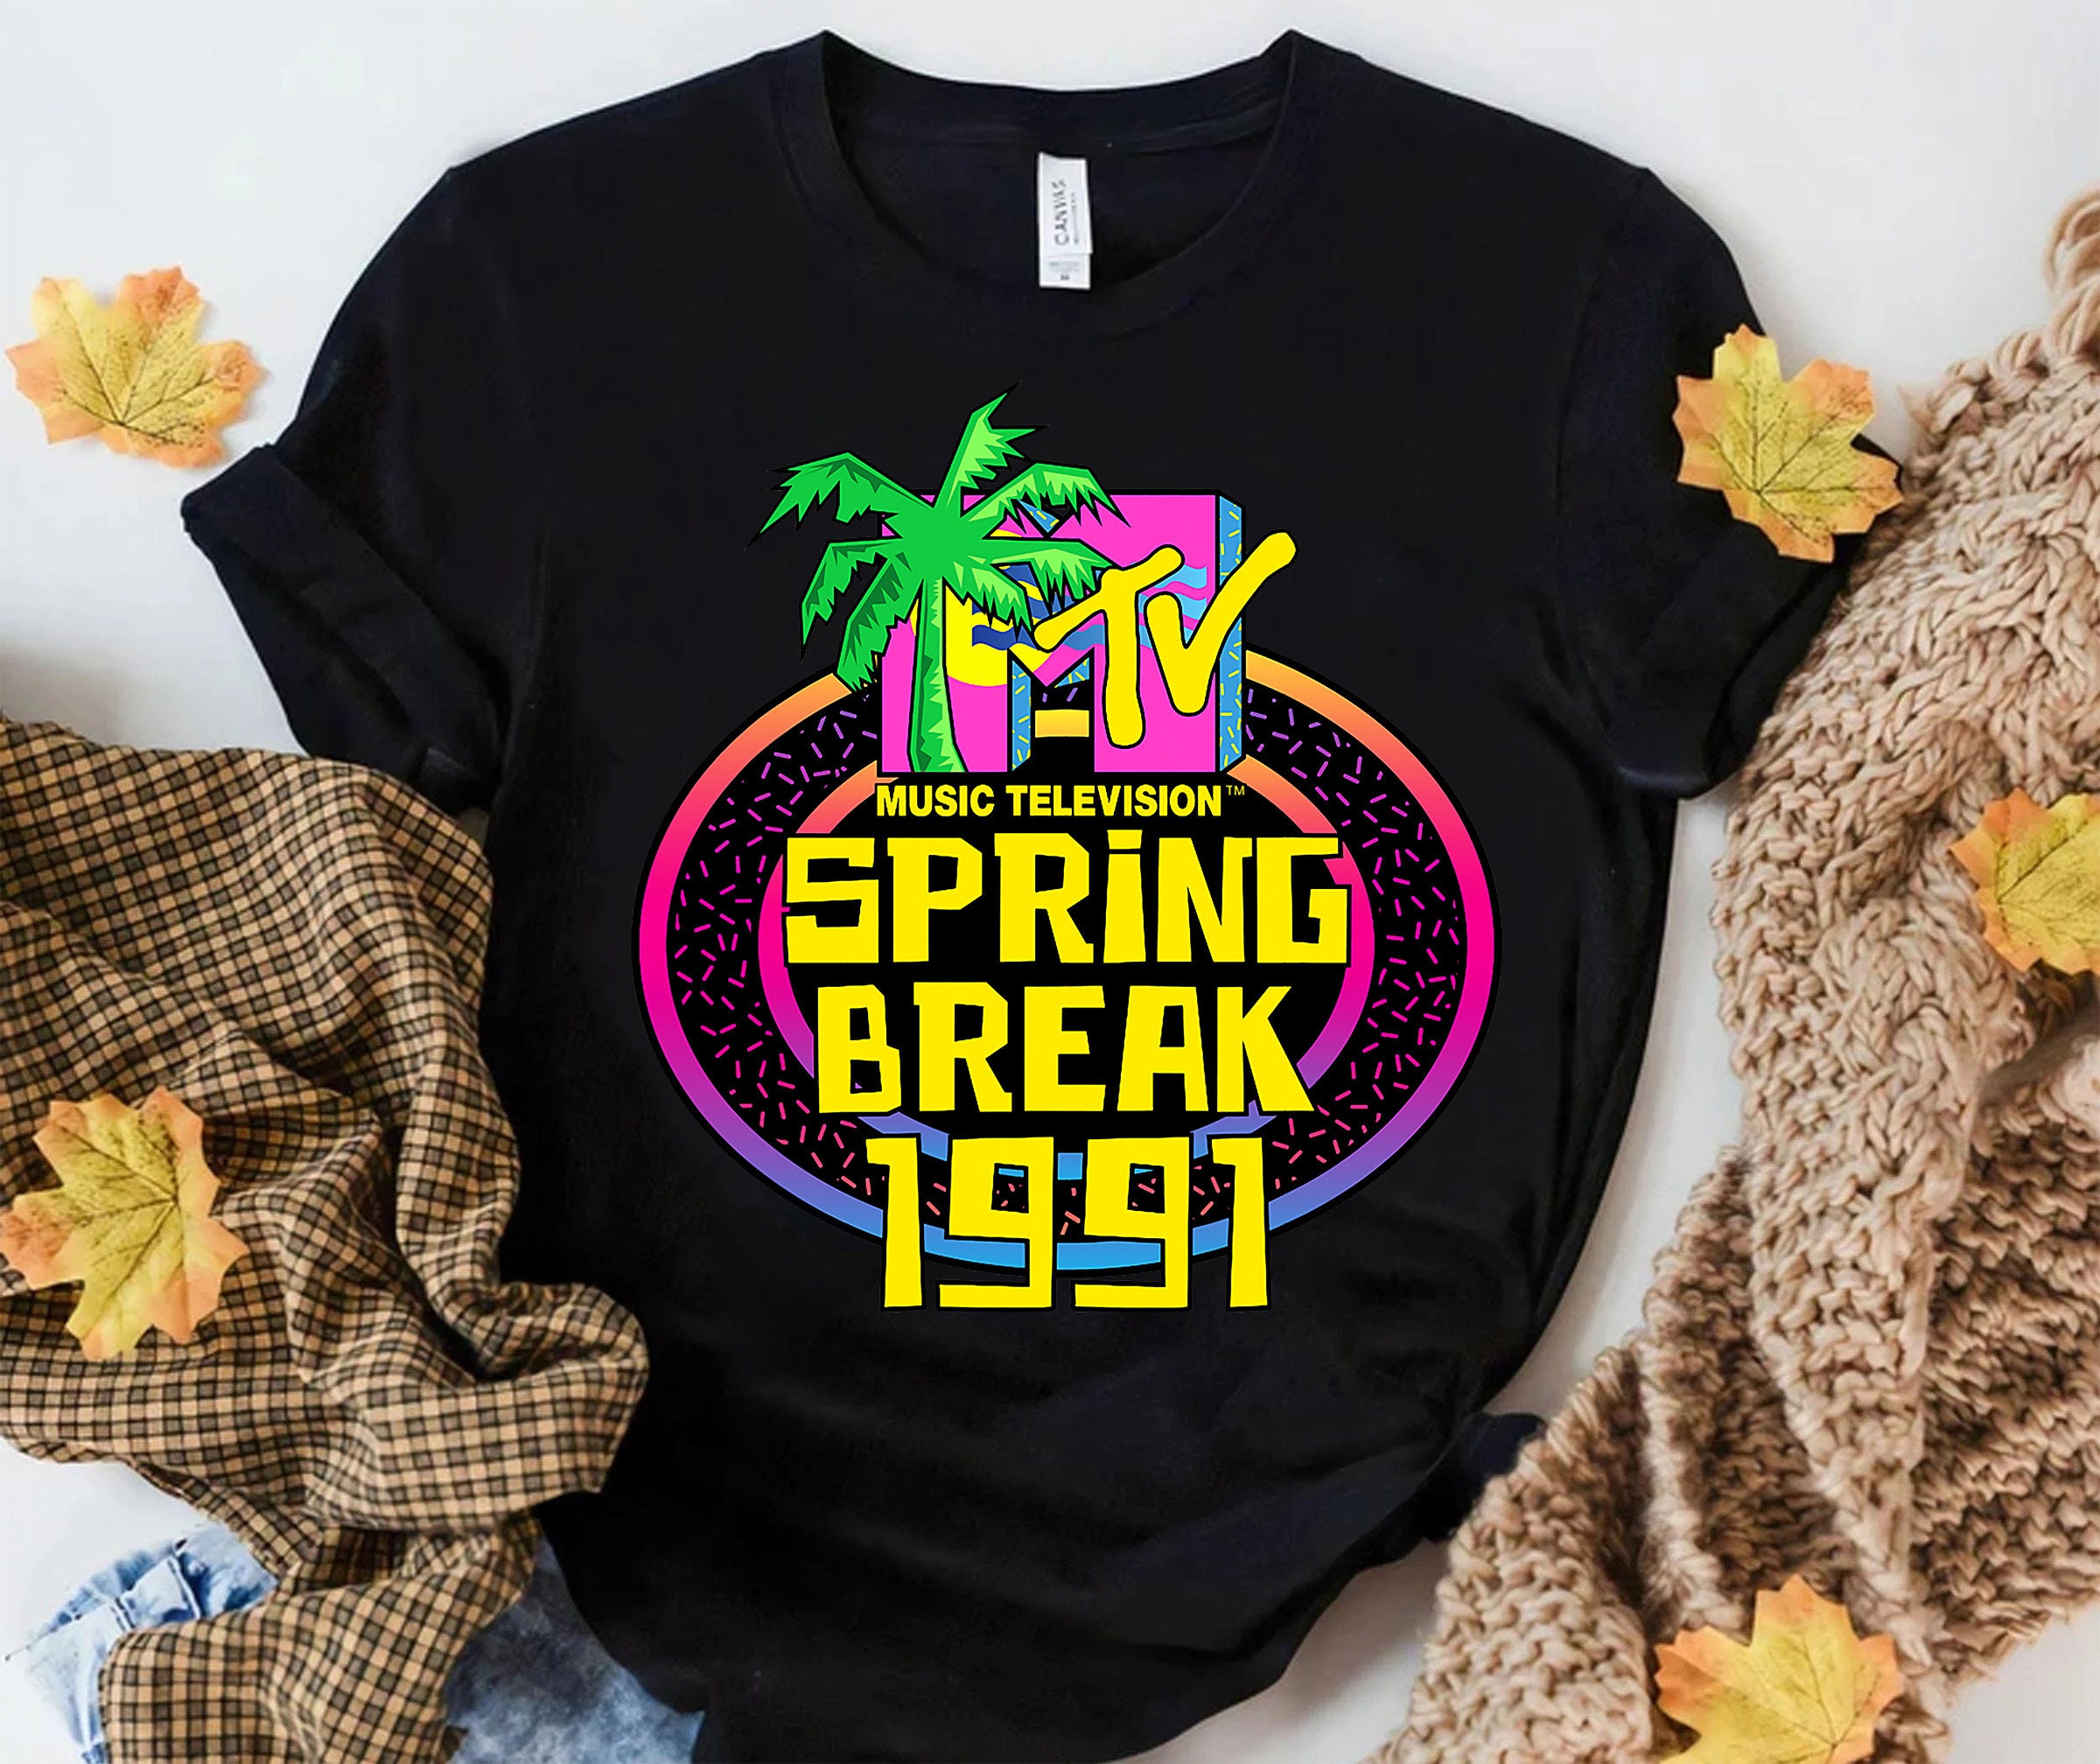 2023 Spring Break Squad Pastel Rainbow Vintage Graphic Sweatshirt